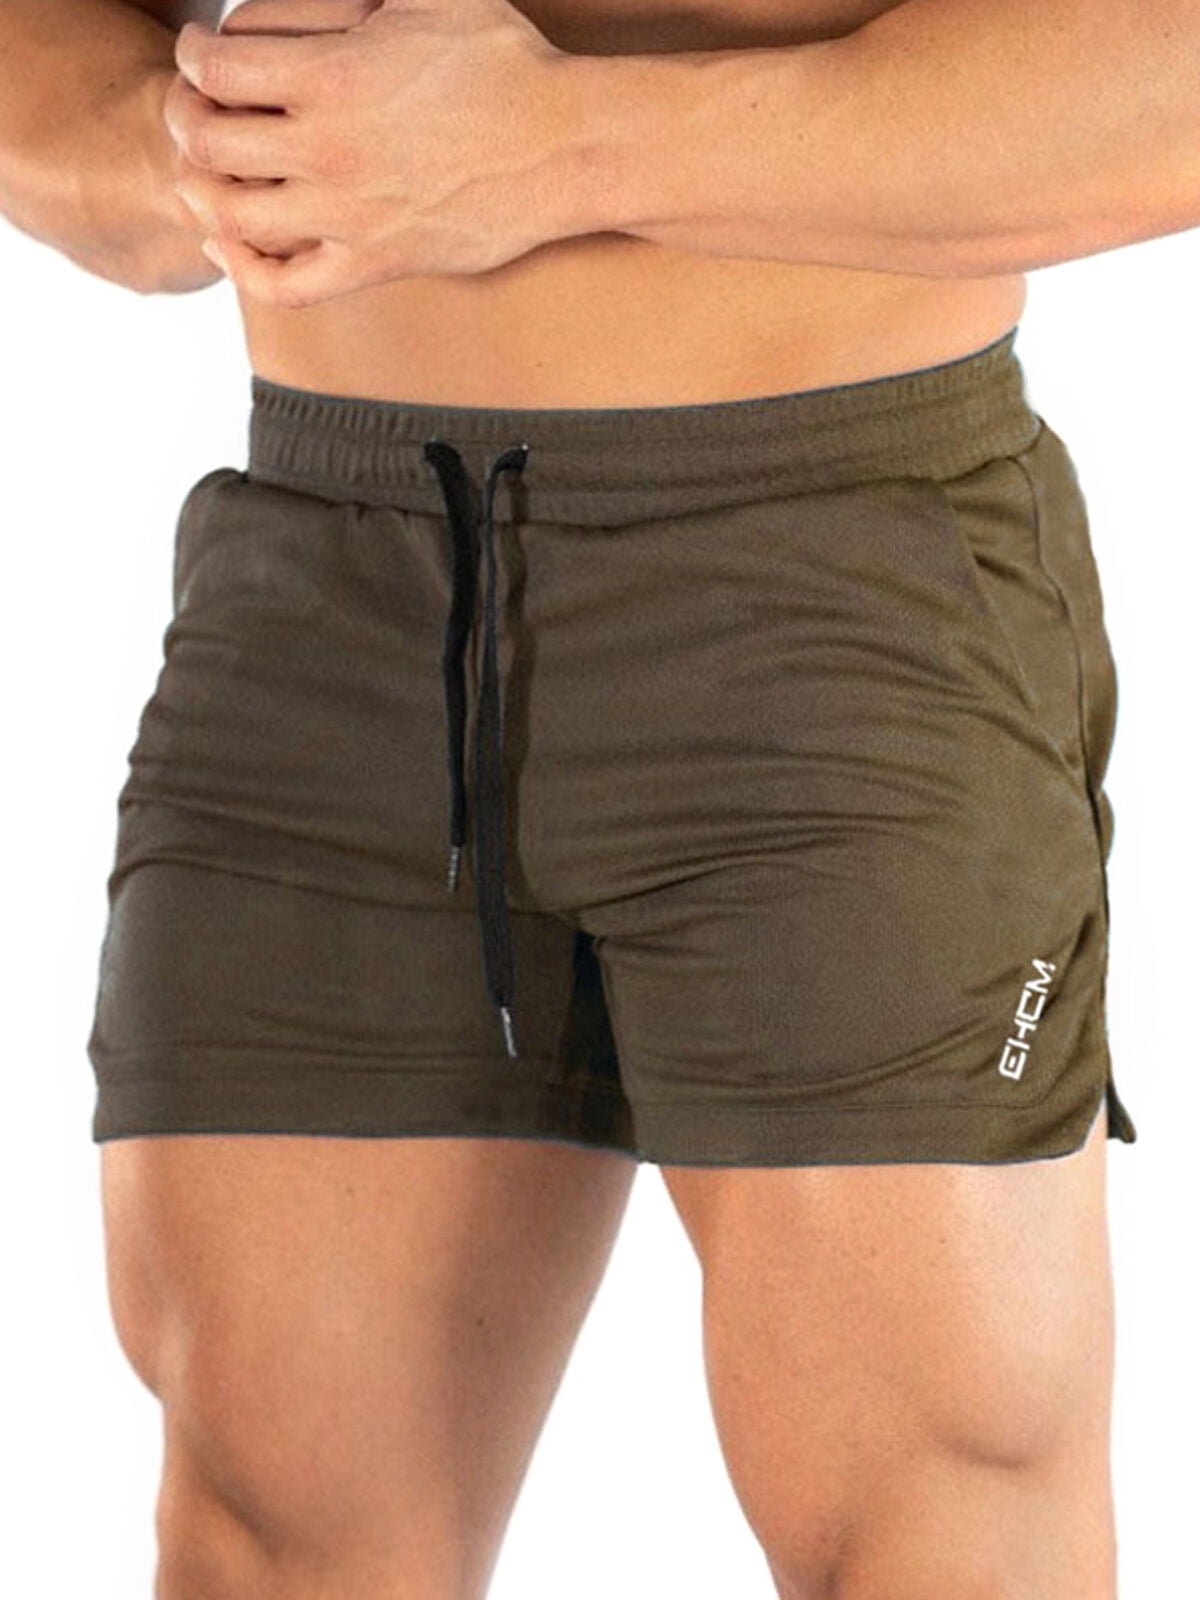 Men's Sports Training Bodybuilding Summer Shorts Workout Fitness GYM Short Pants 